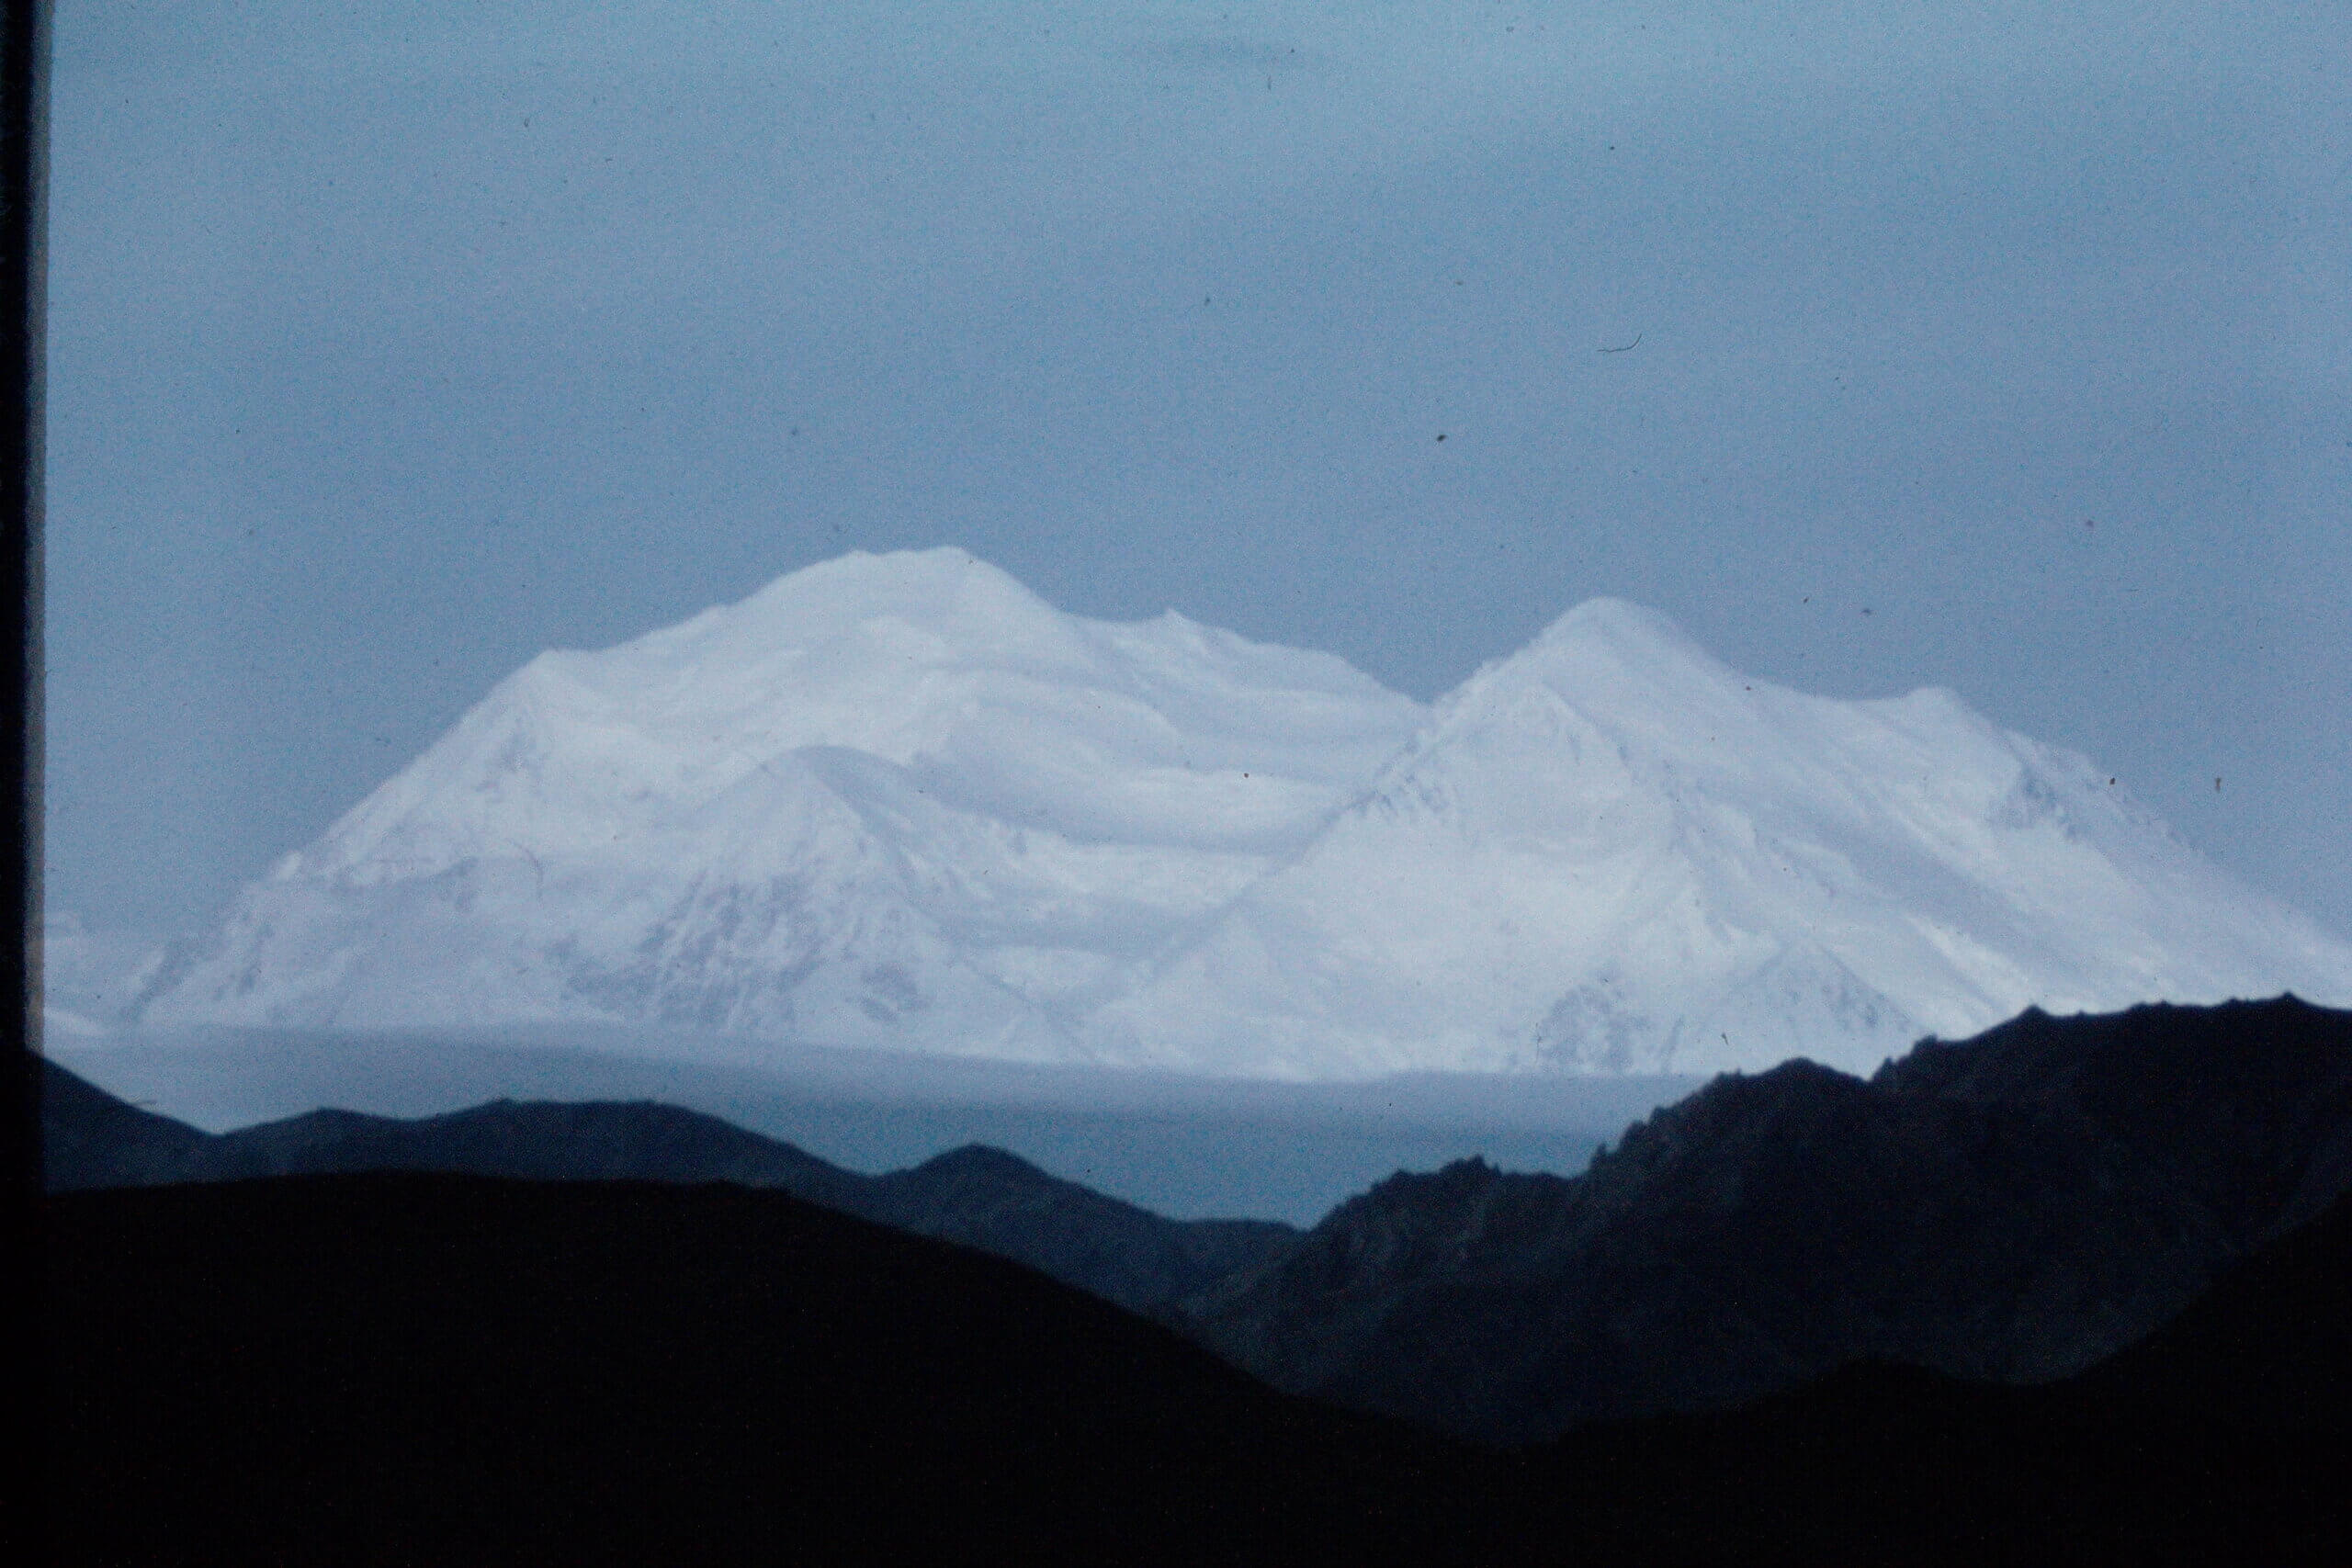 Mount Denali (formerly McKinley) - highest mountain in North America